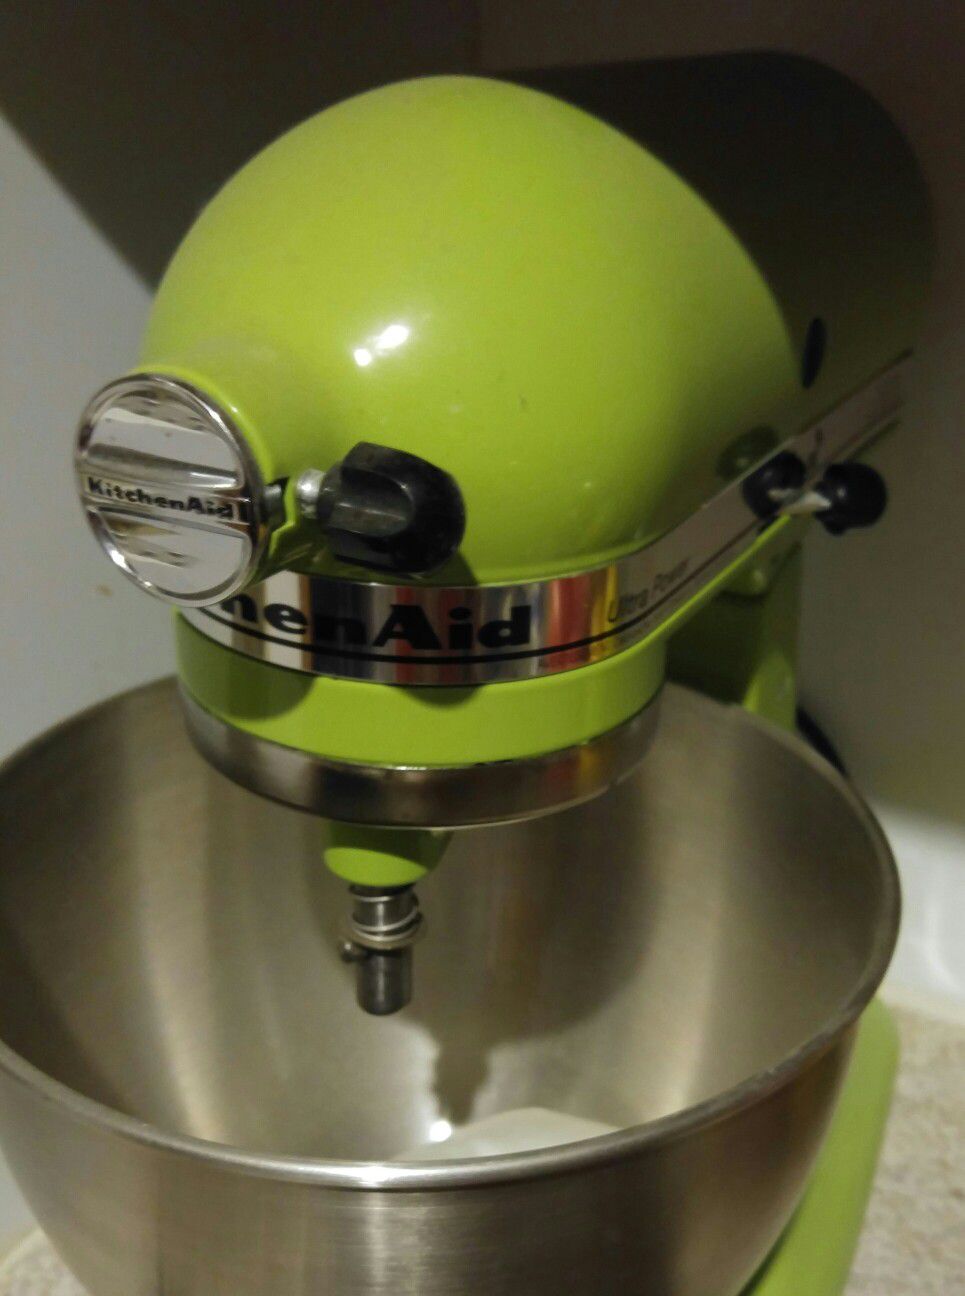 Kitchenaid mixer lime green new for Sale in Oklahoma City, OK